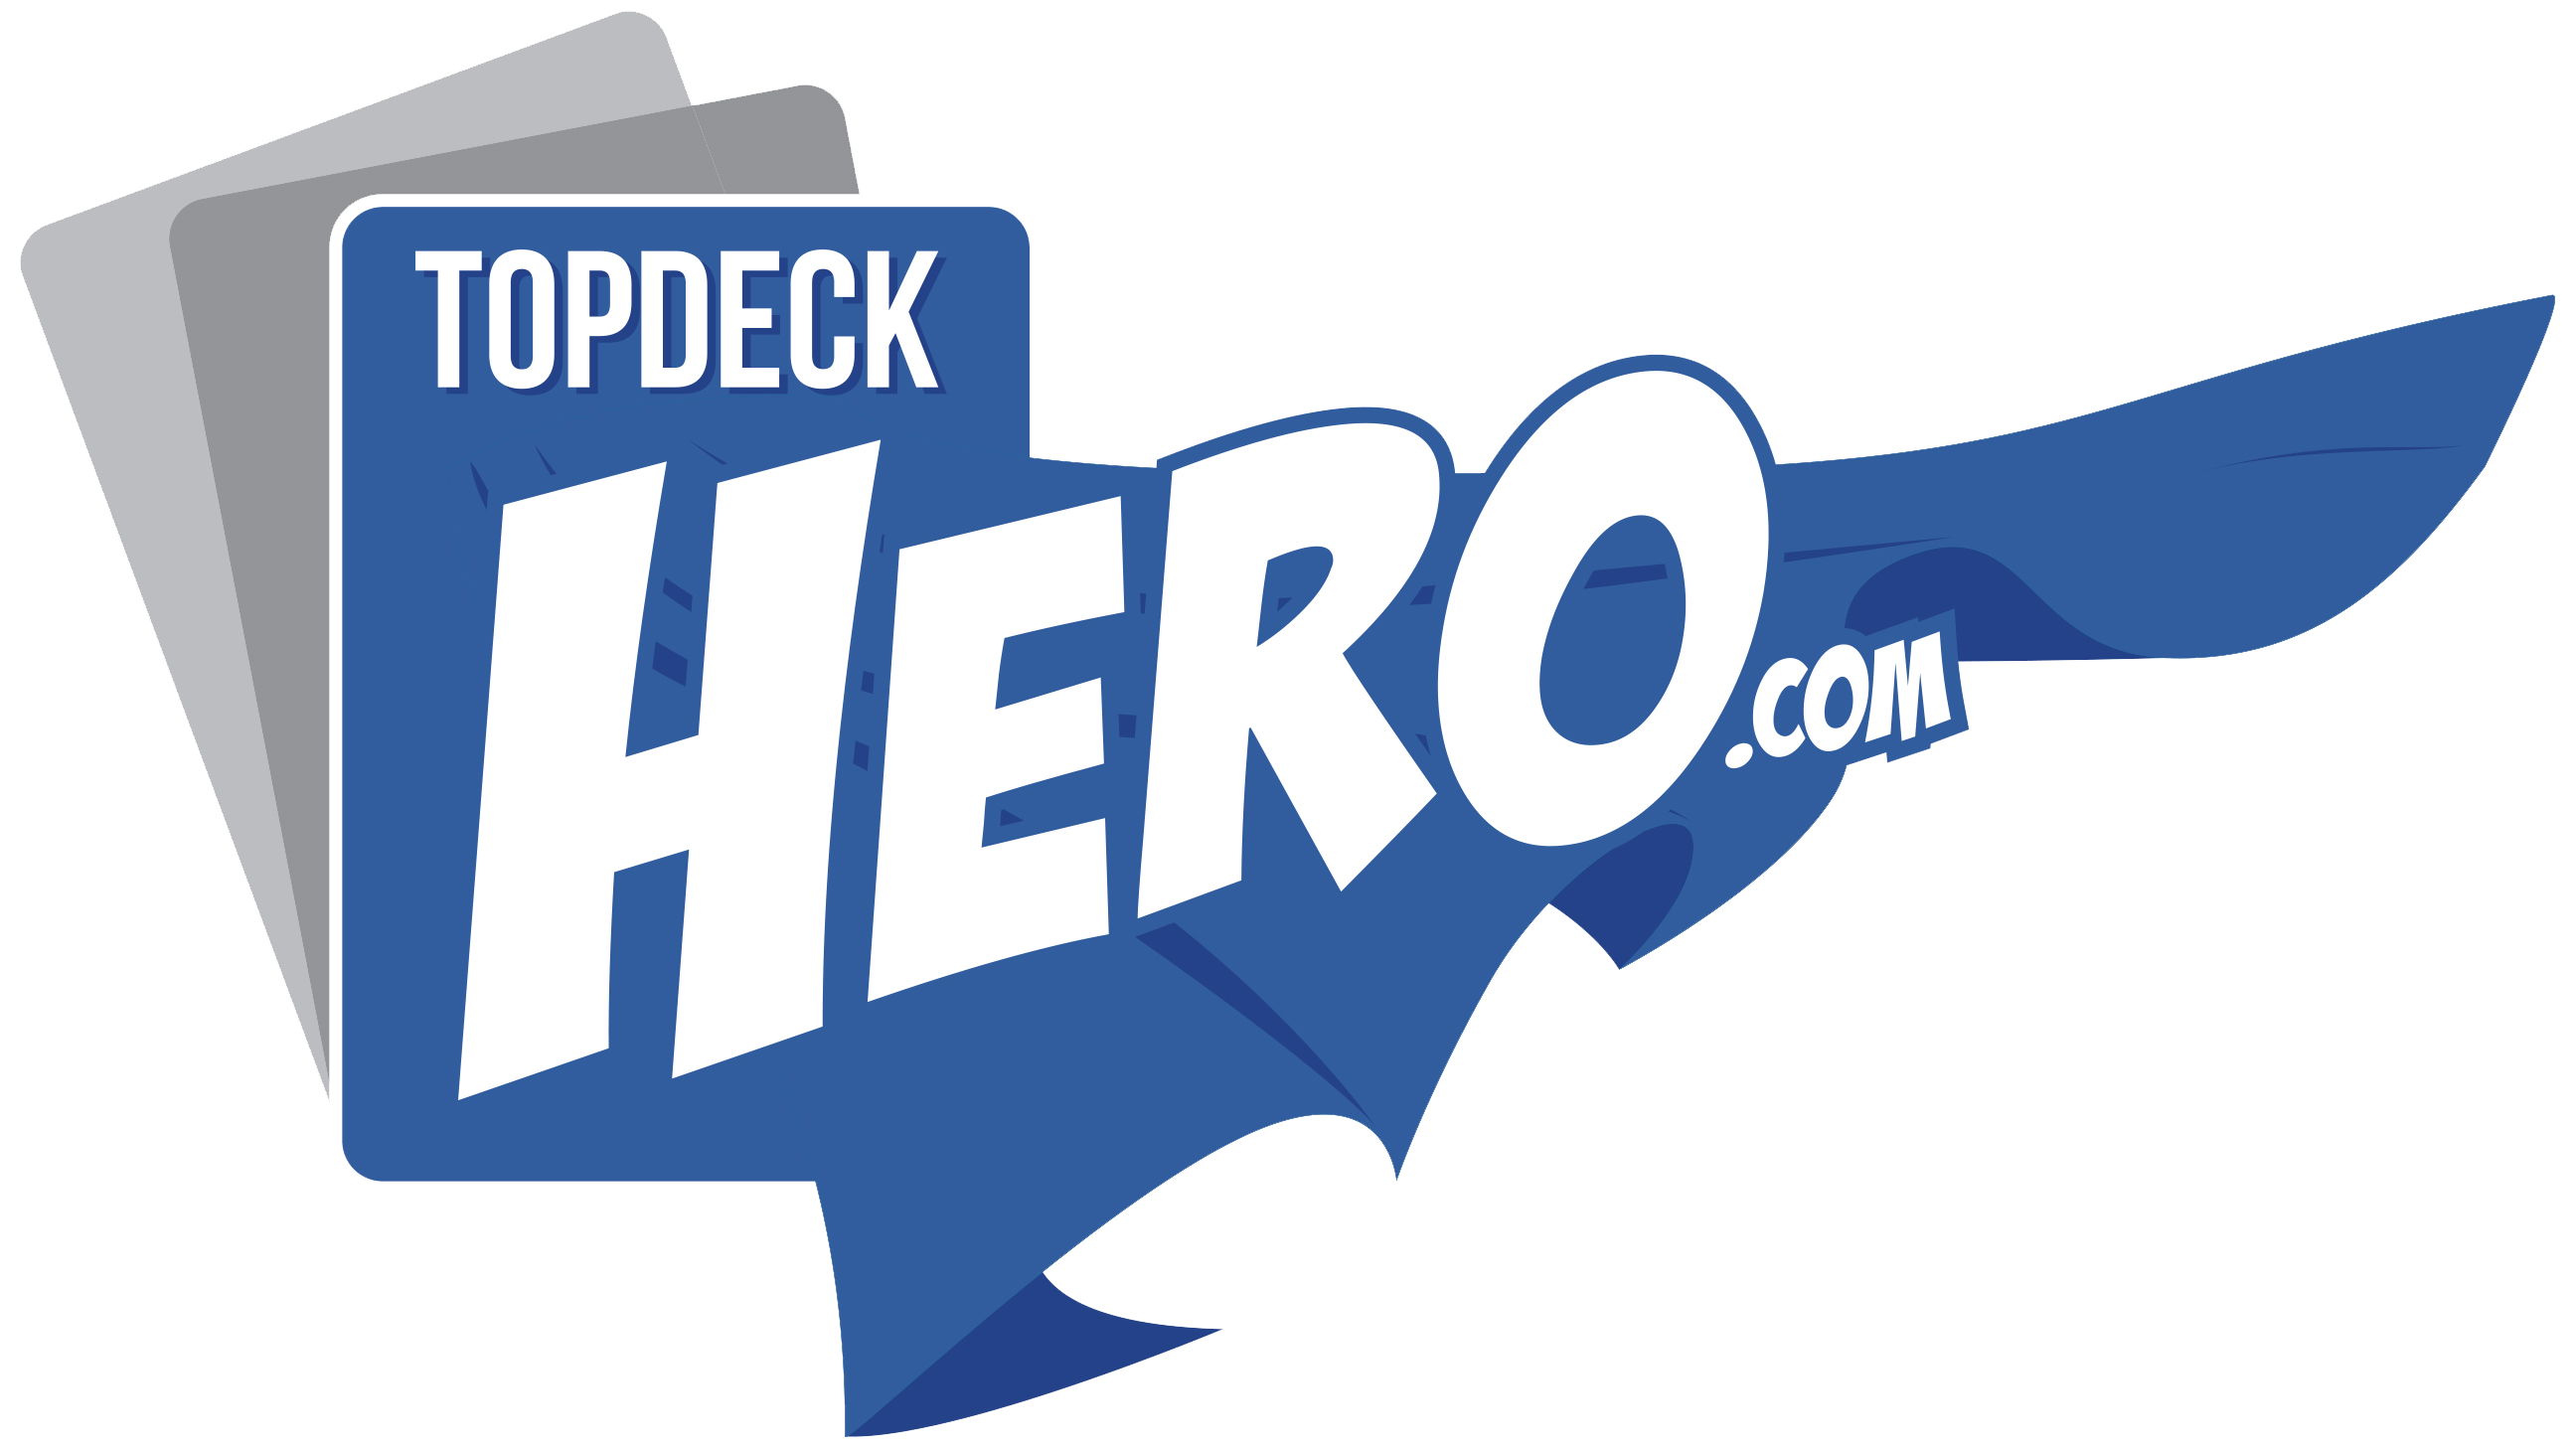 Topdeck Hero Logo